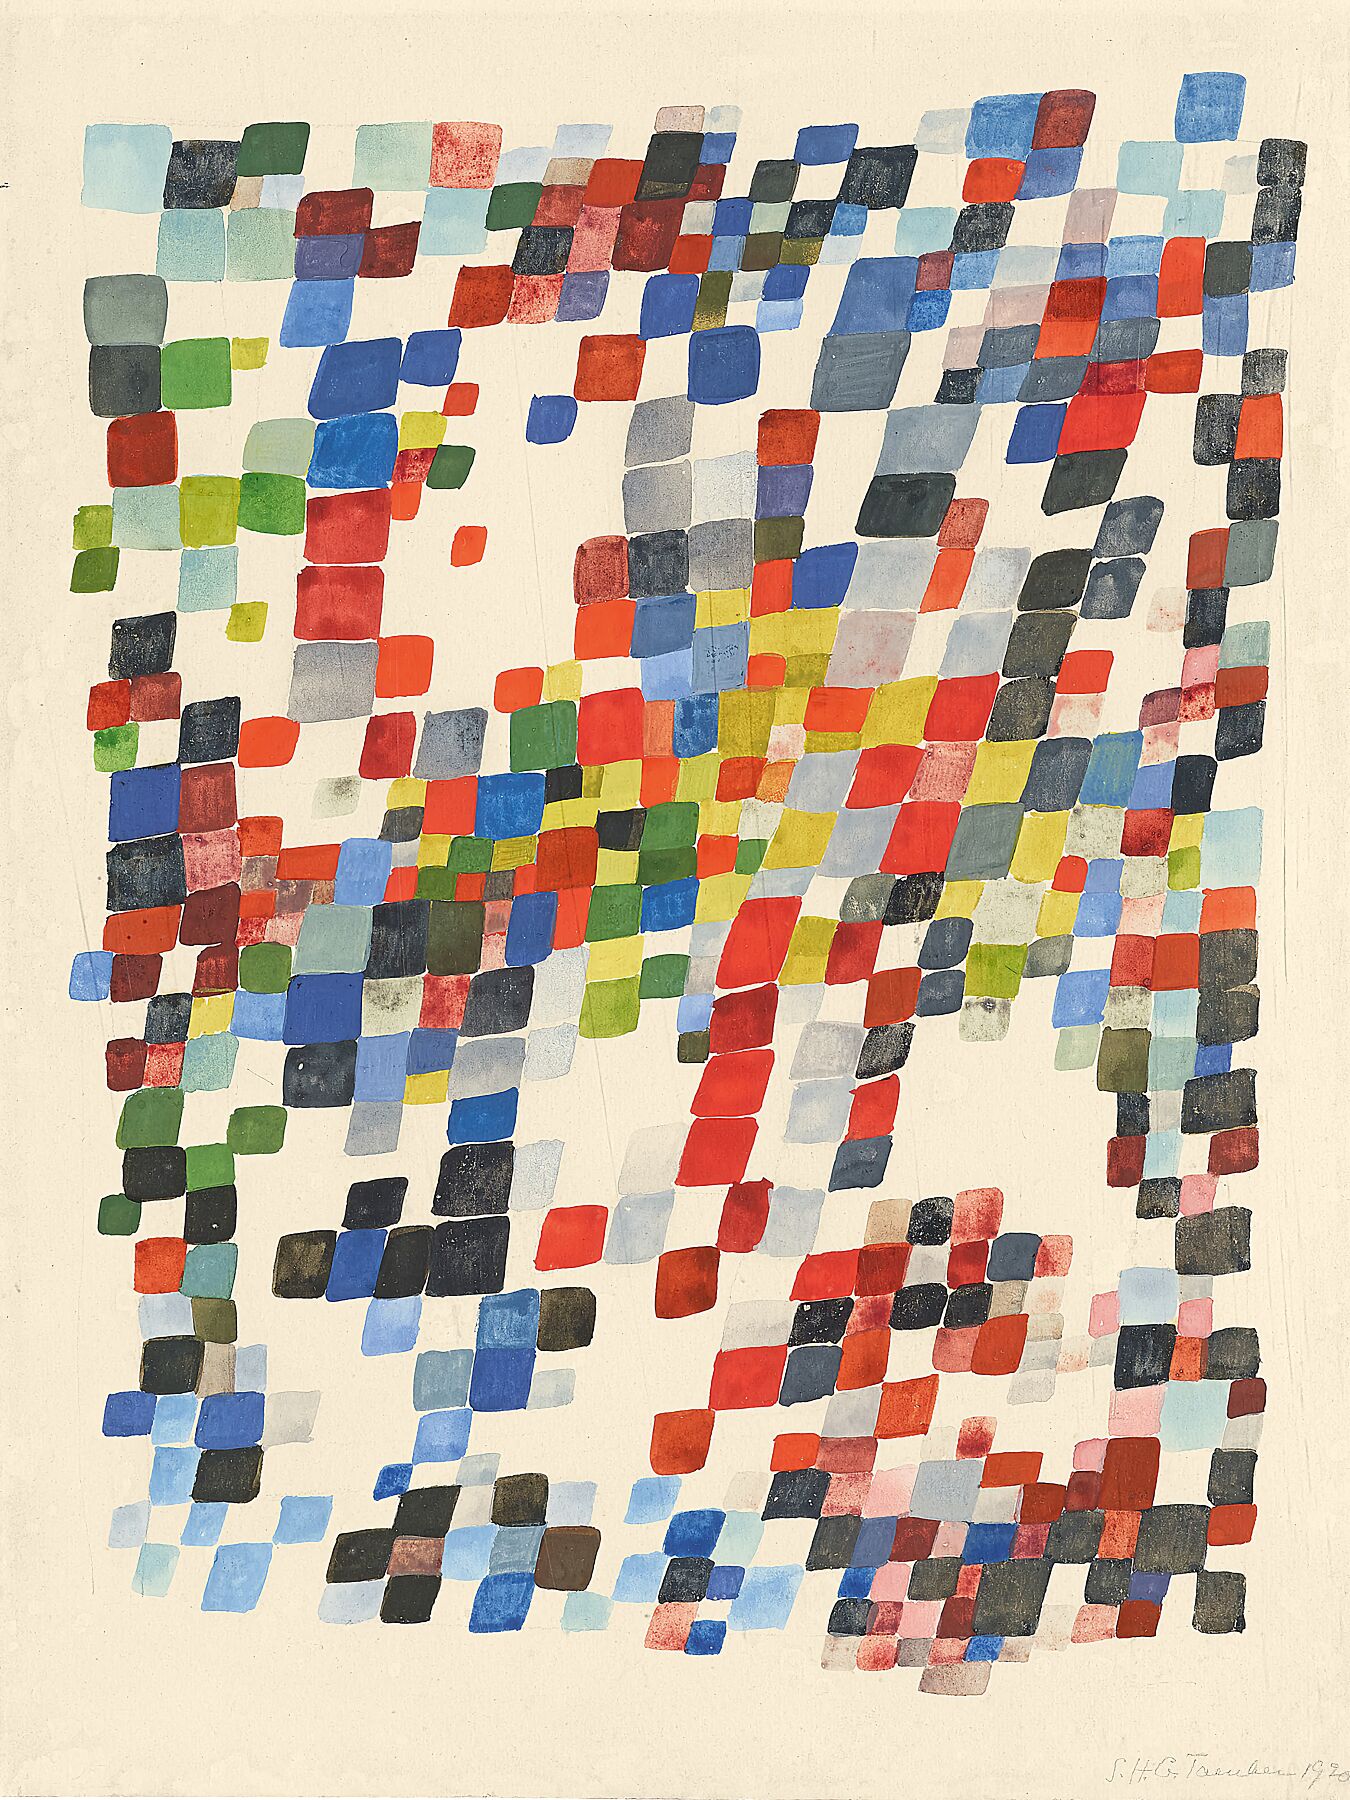 Composition of Quadrangular Polychrome Dense Strokes by Sophie Taeuber-Arp, 1920